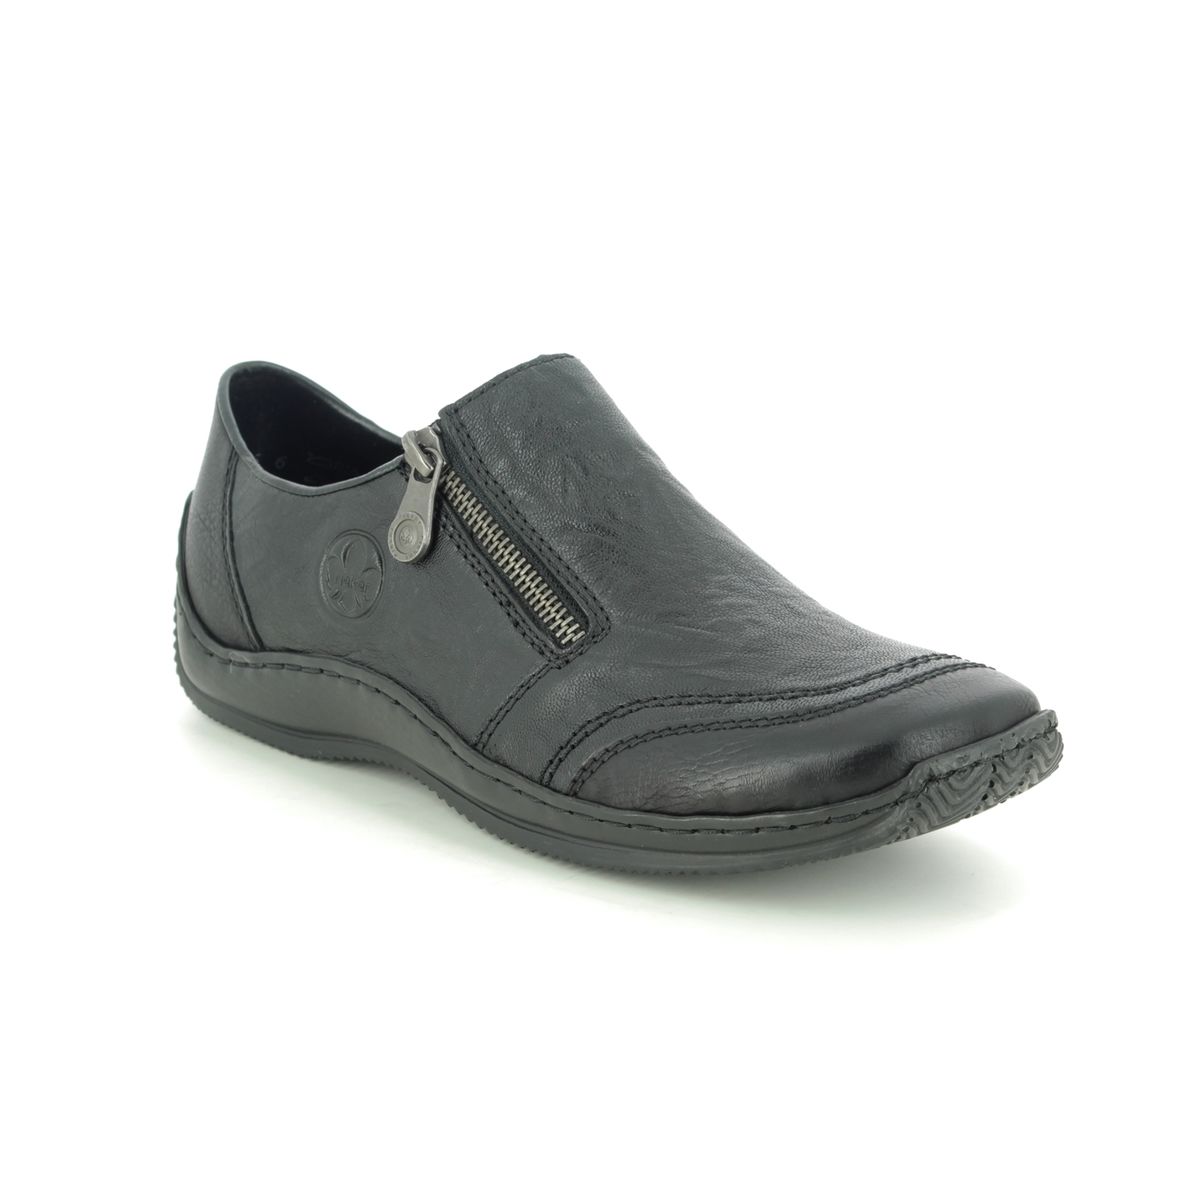 At vise Berri Løse Rieker L1771-00 Black Leather Comfort Slip On Shoes